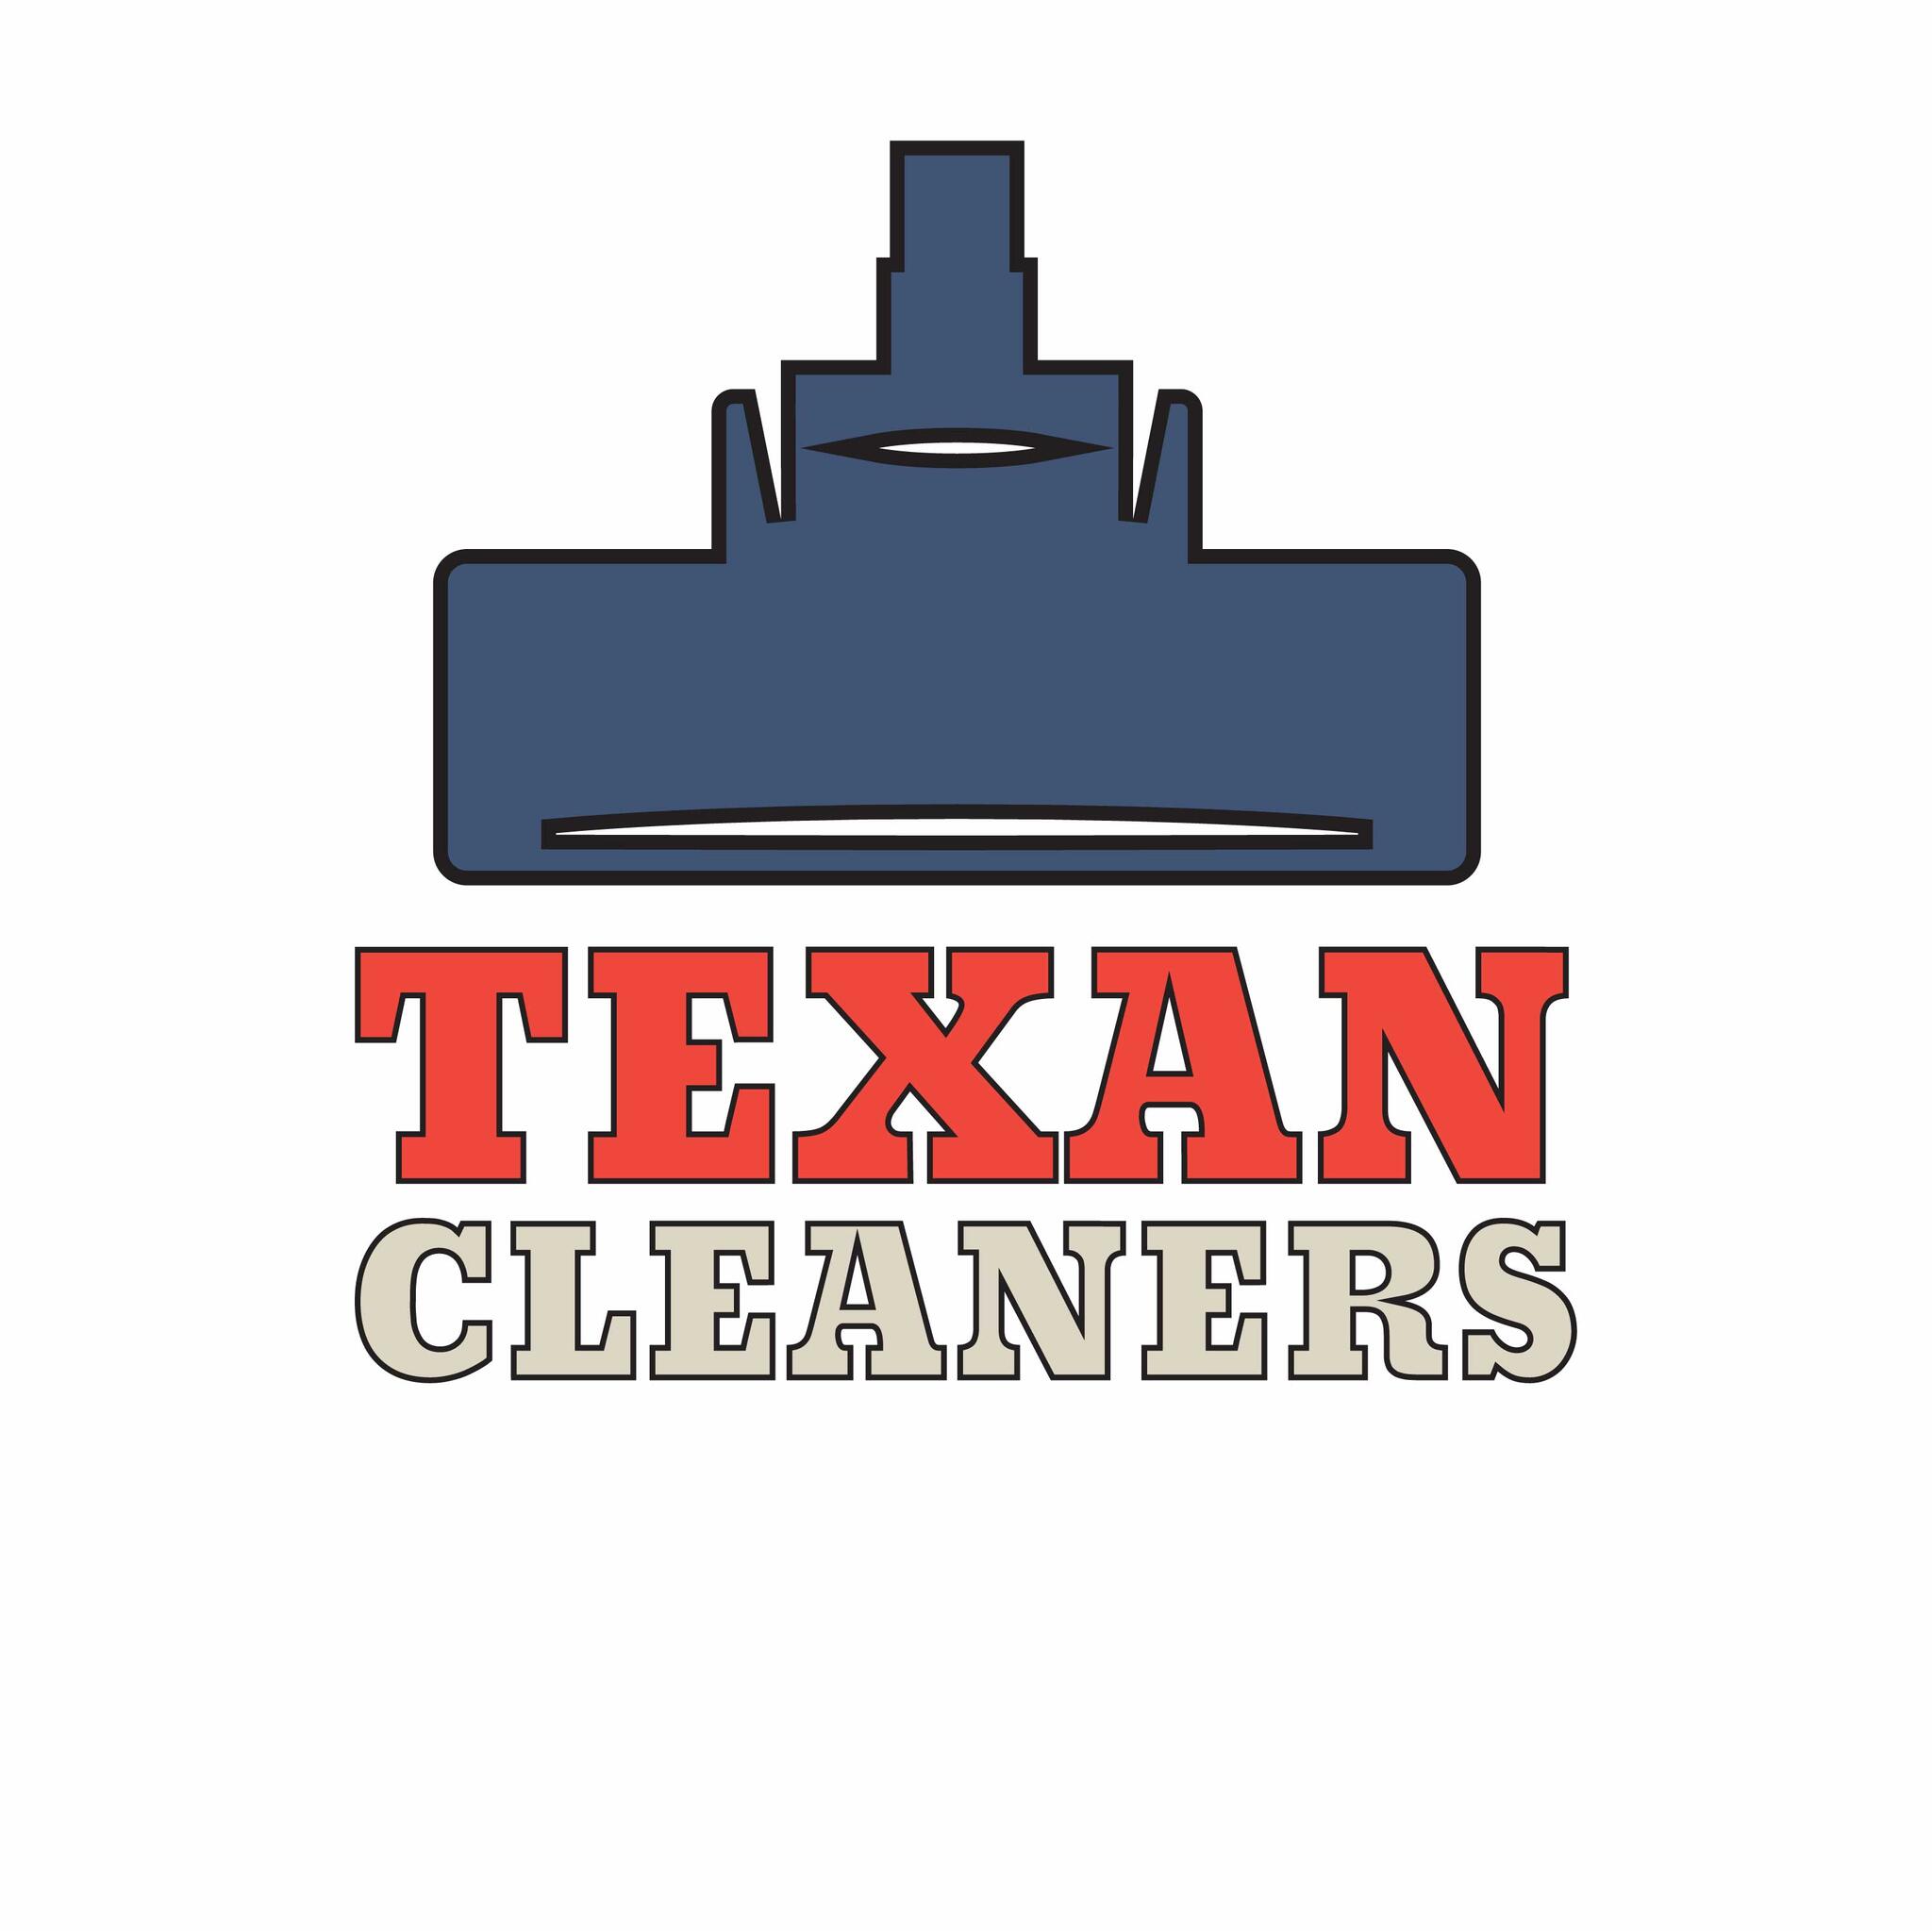 Top 10 Local Favorite Chimney Cleaner near Stone Oak, San Antonio, TX 78258  - Last Updated April 2020 - Yelp